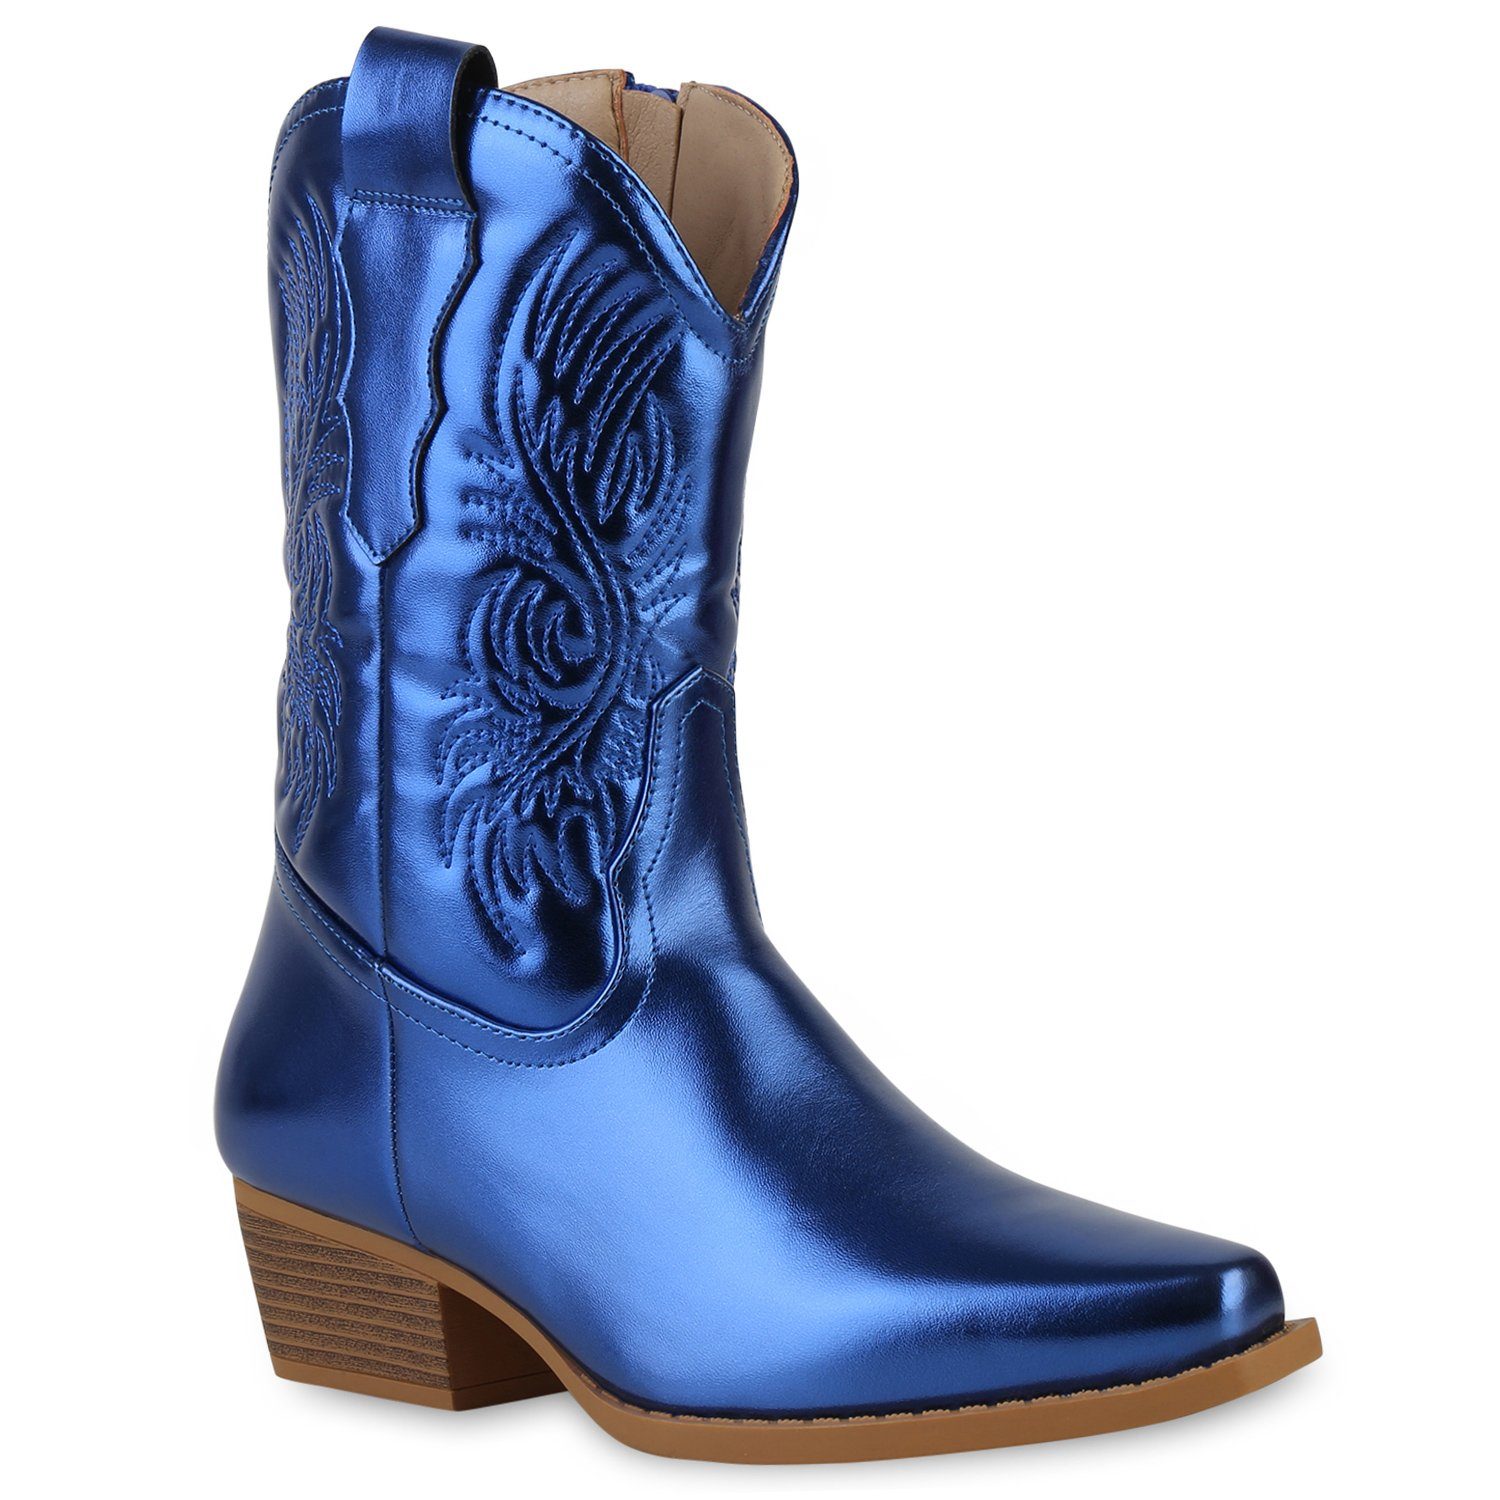 VAN HILL 840254 Cowboy Boots Schuhe Blau Metallic